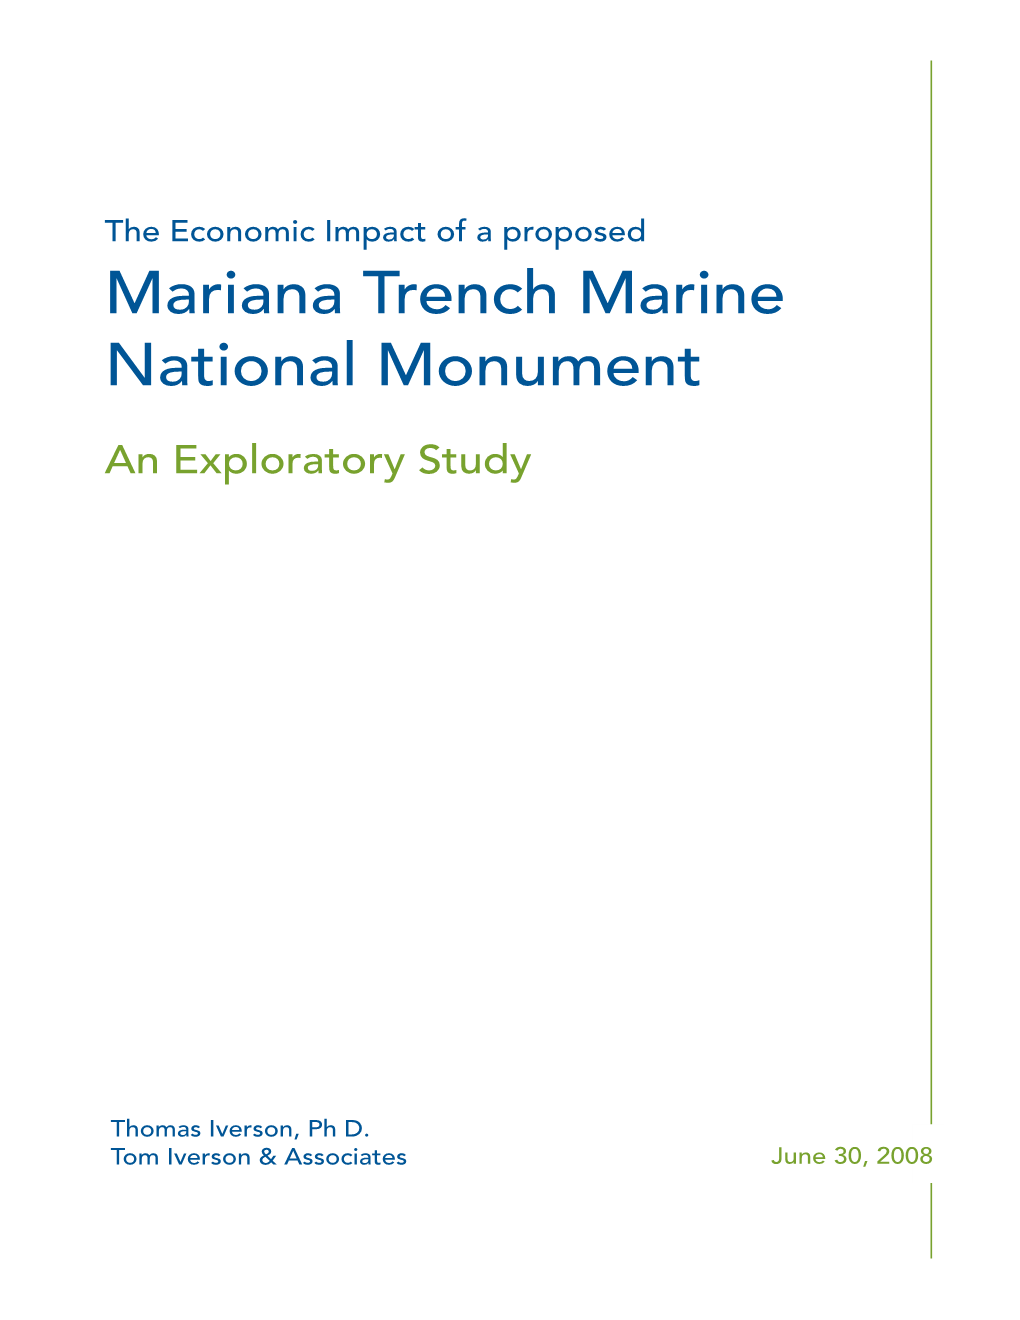 Mariana Trench Marine National Monument